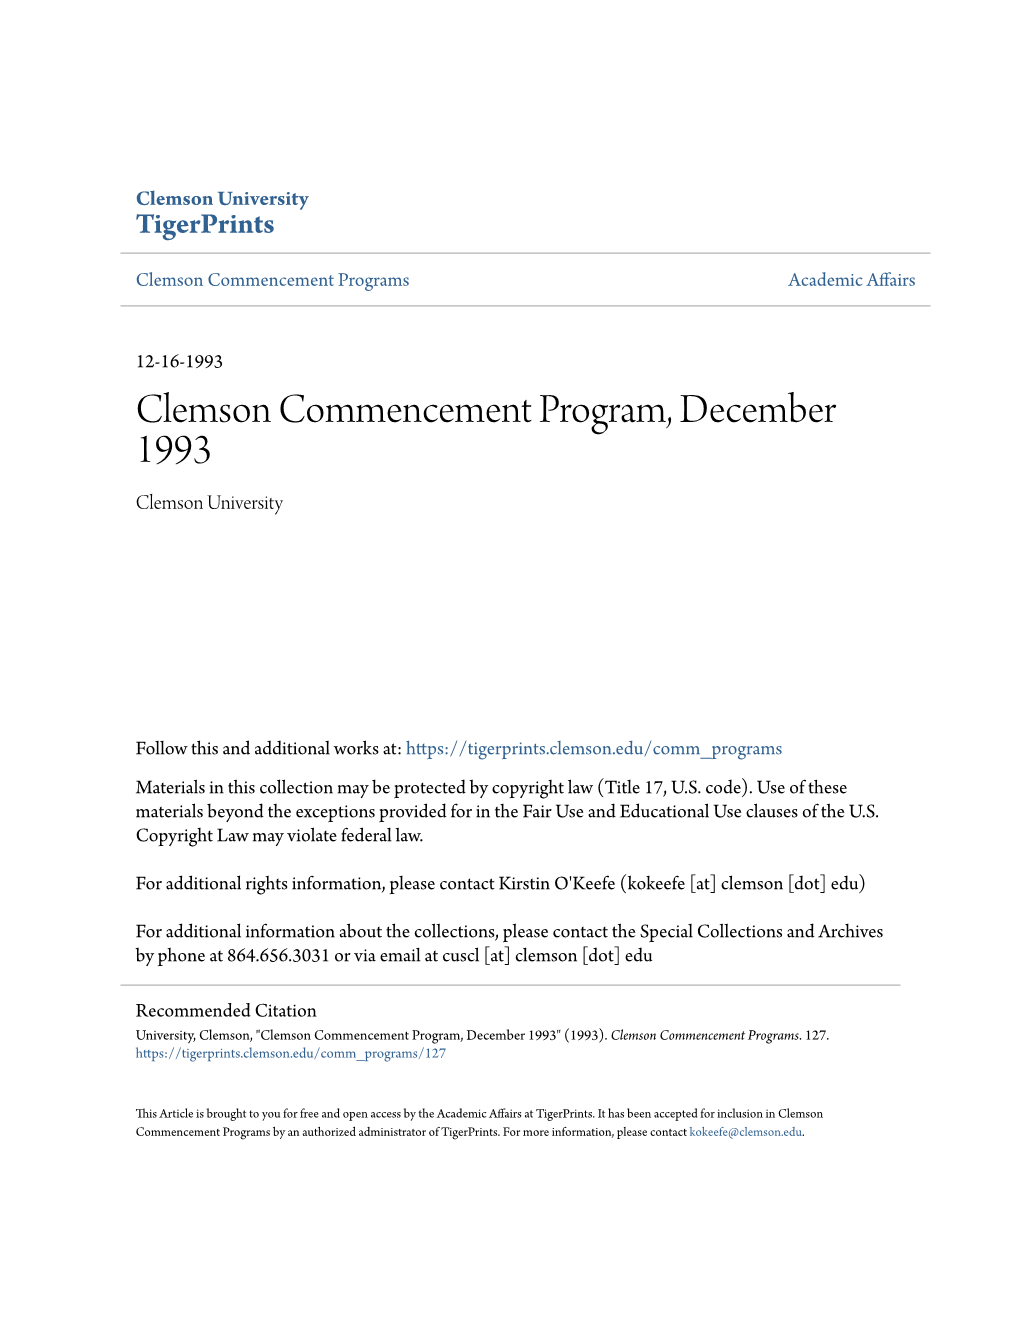 Clemson Commencement Program, December 1993 Clemson University